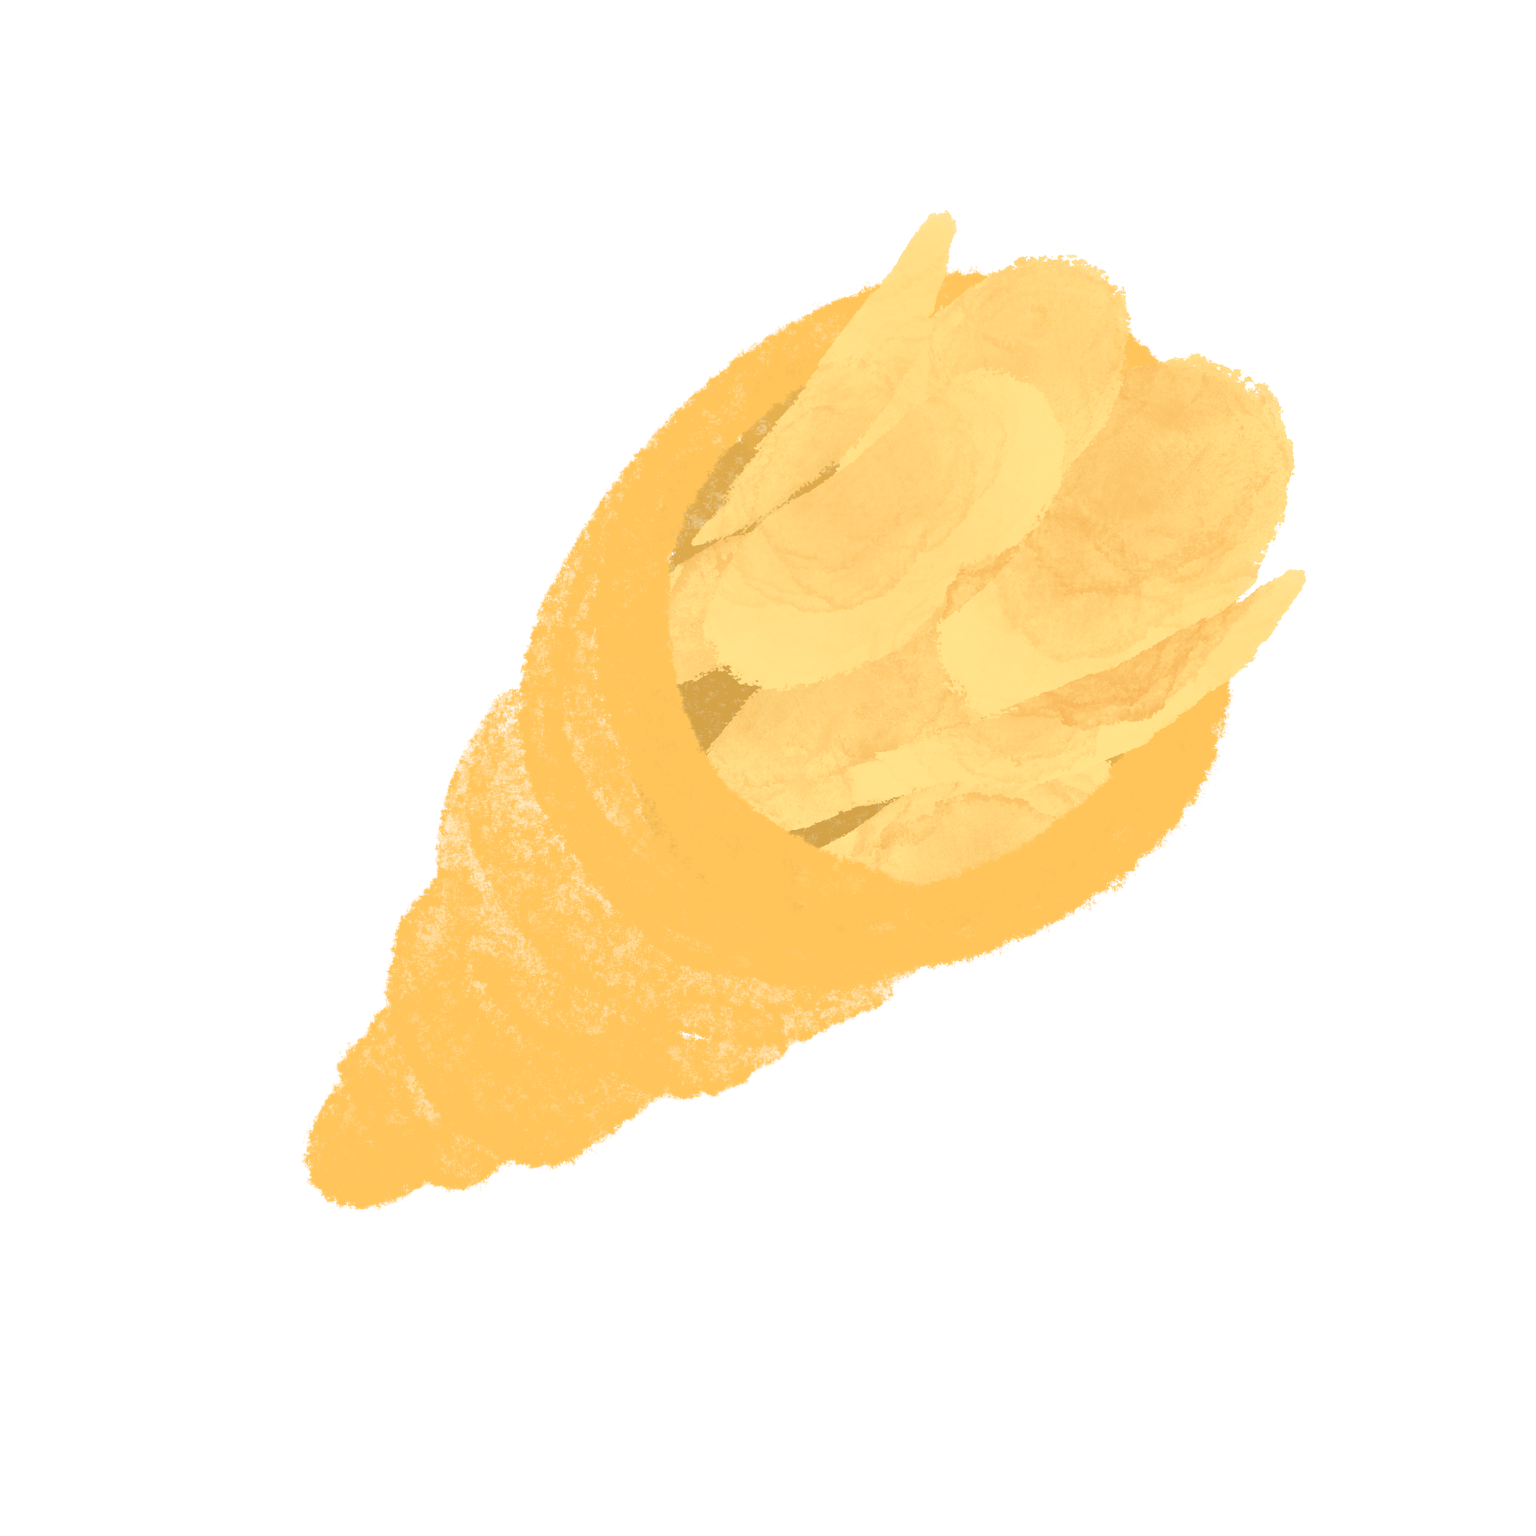 Brushstroke style cone of potato crisps